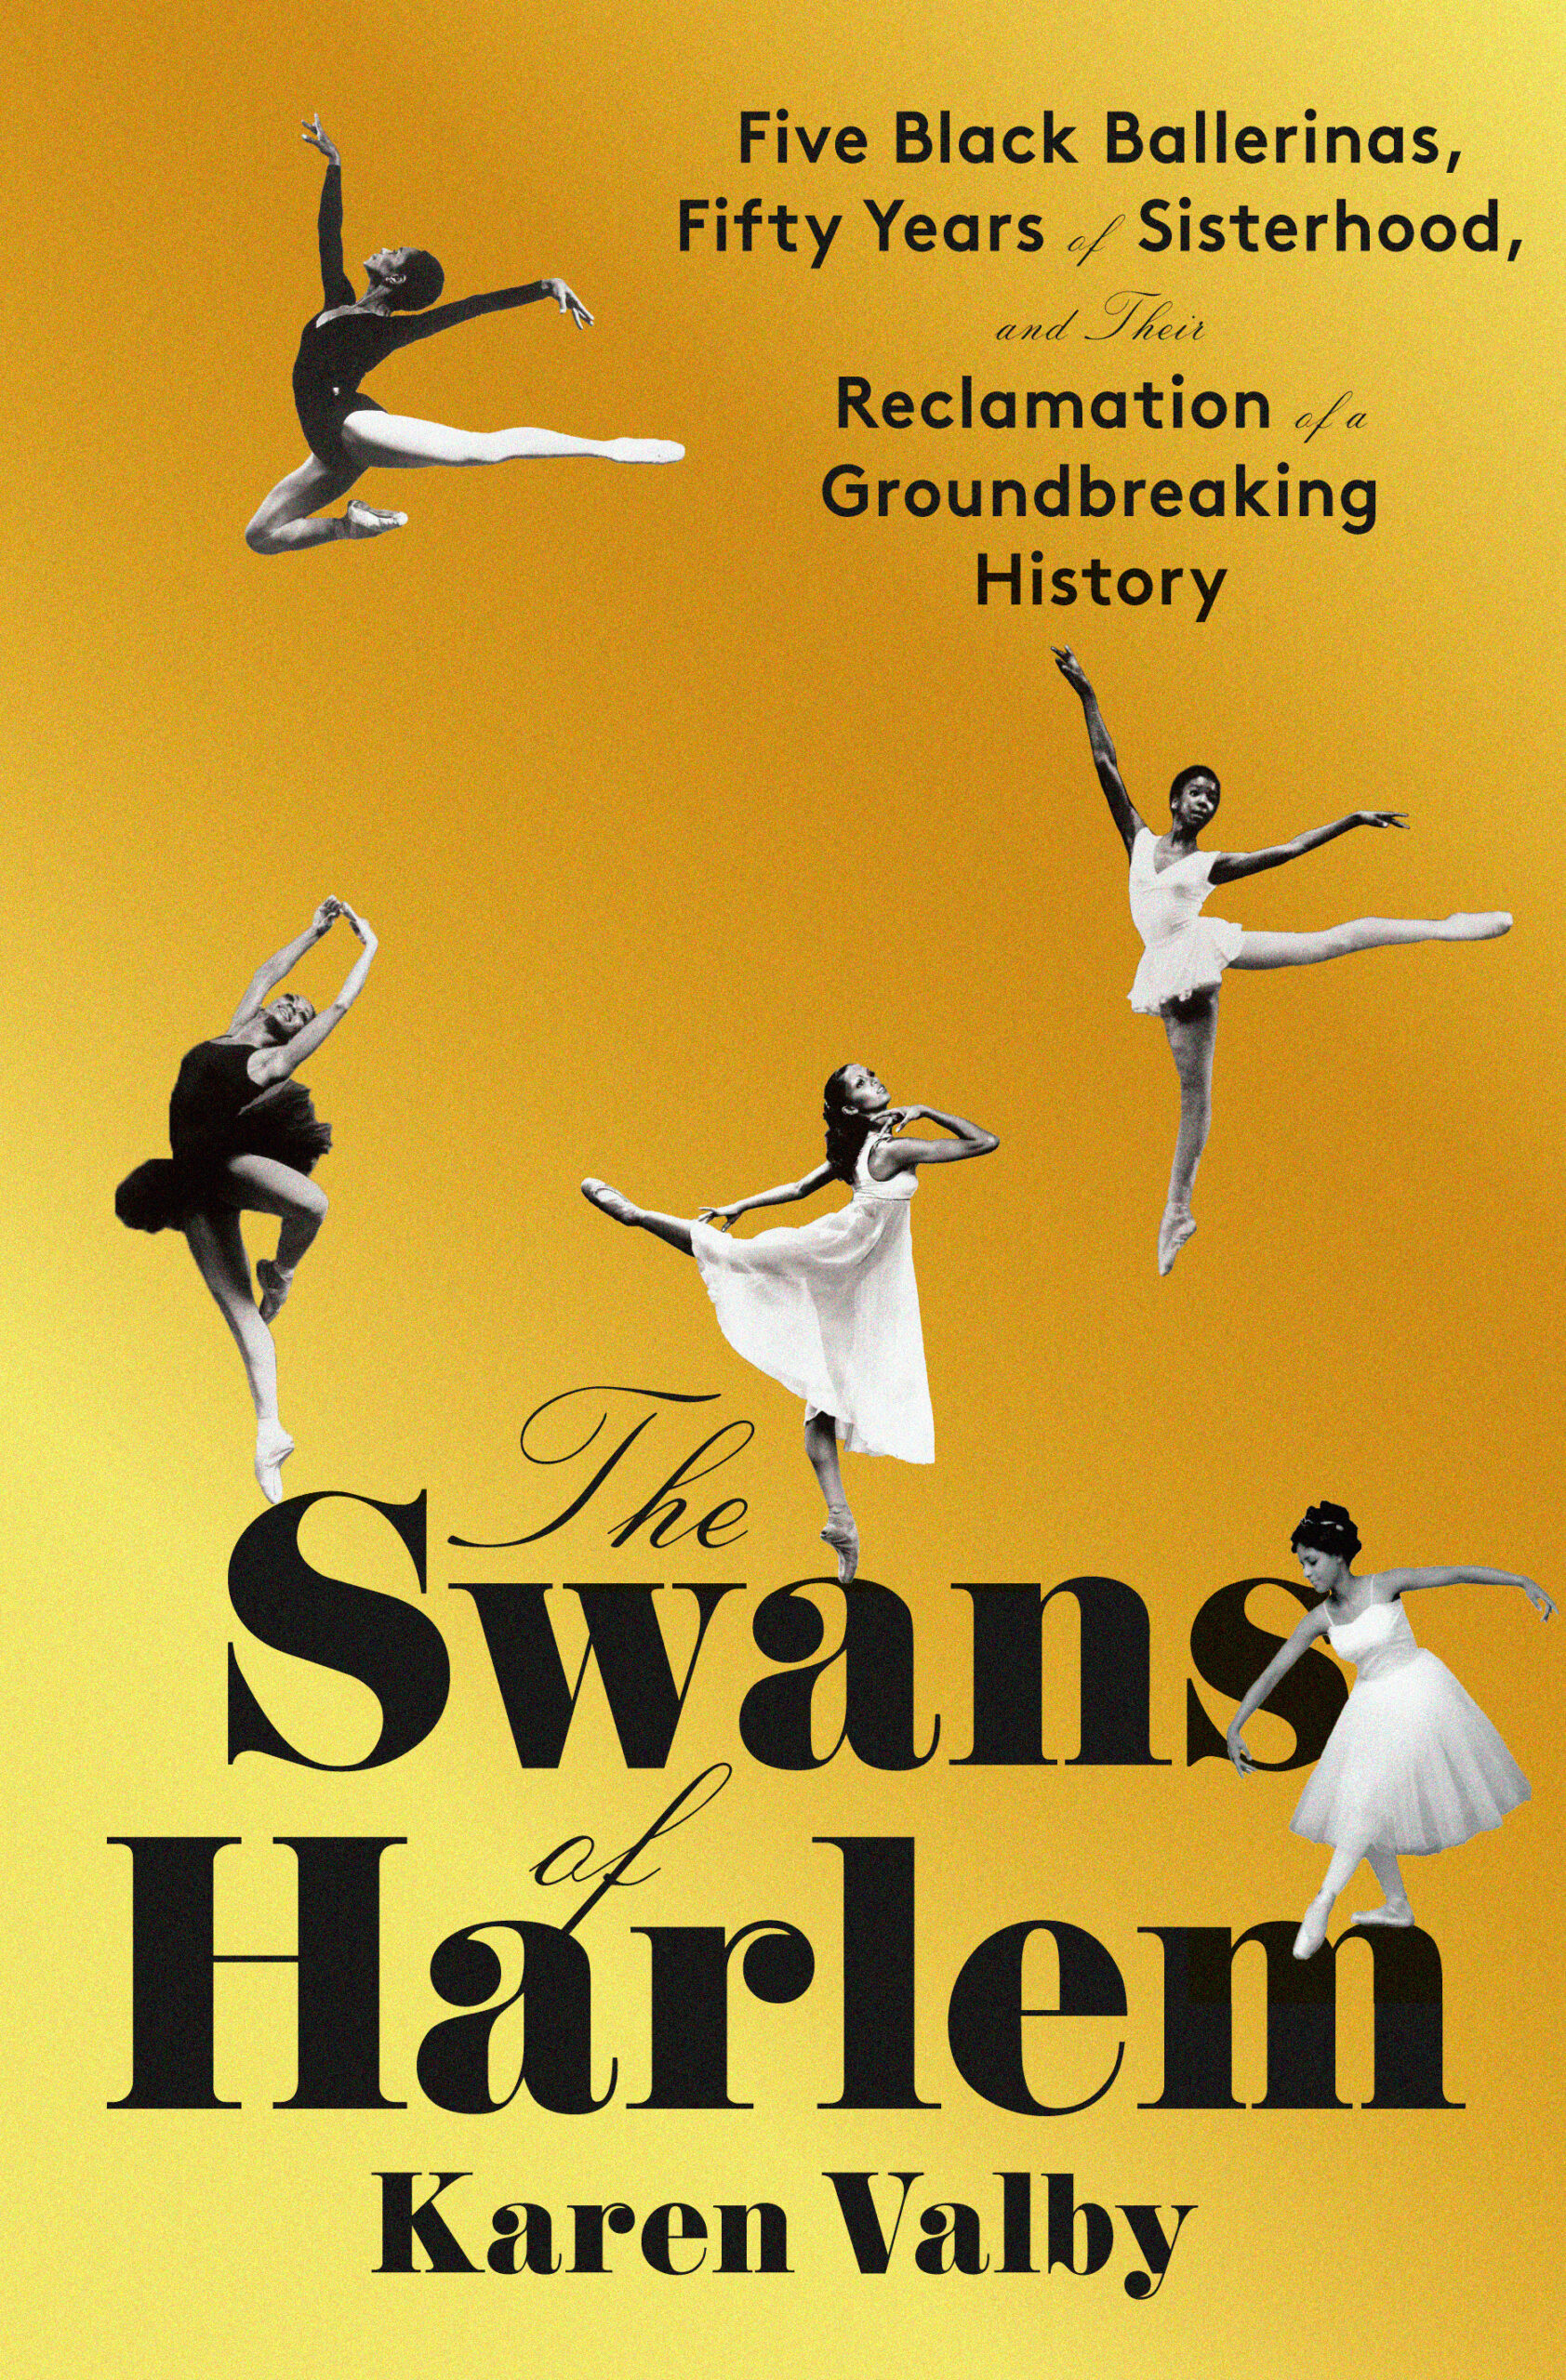 Cover art for The Swans of Harlem. Image credit: Penguin Random House